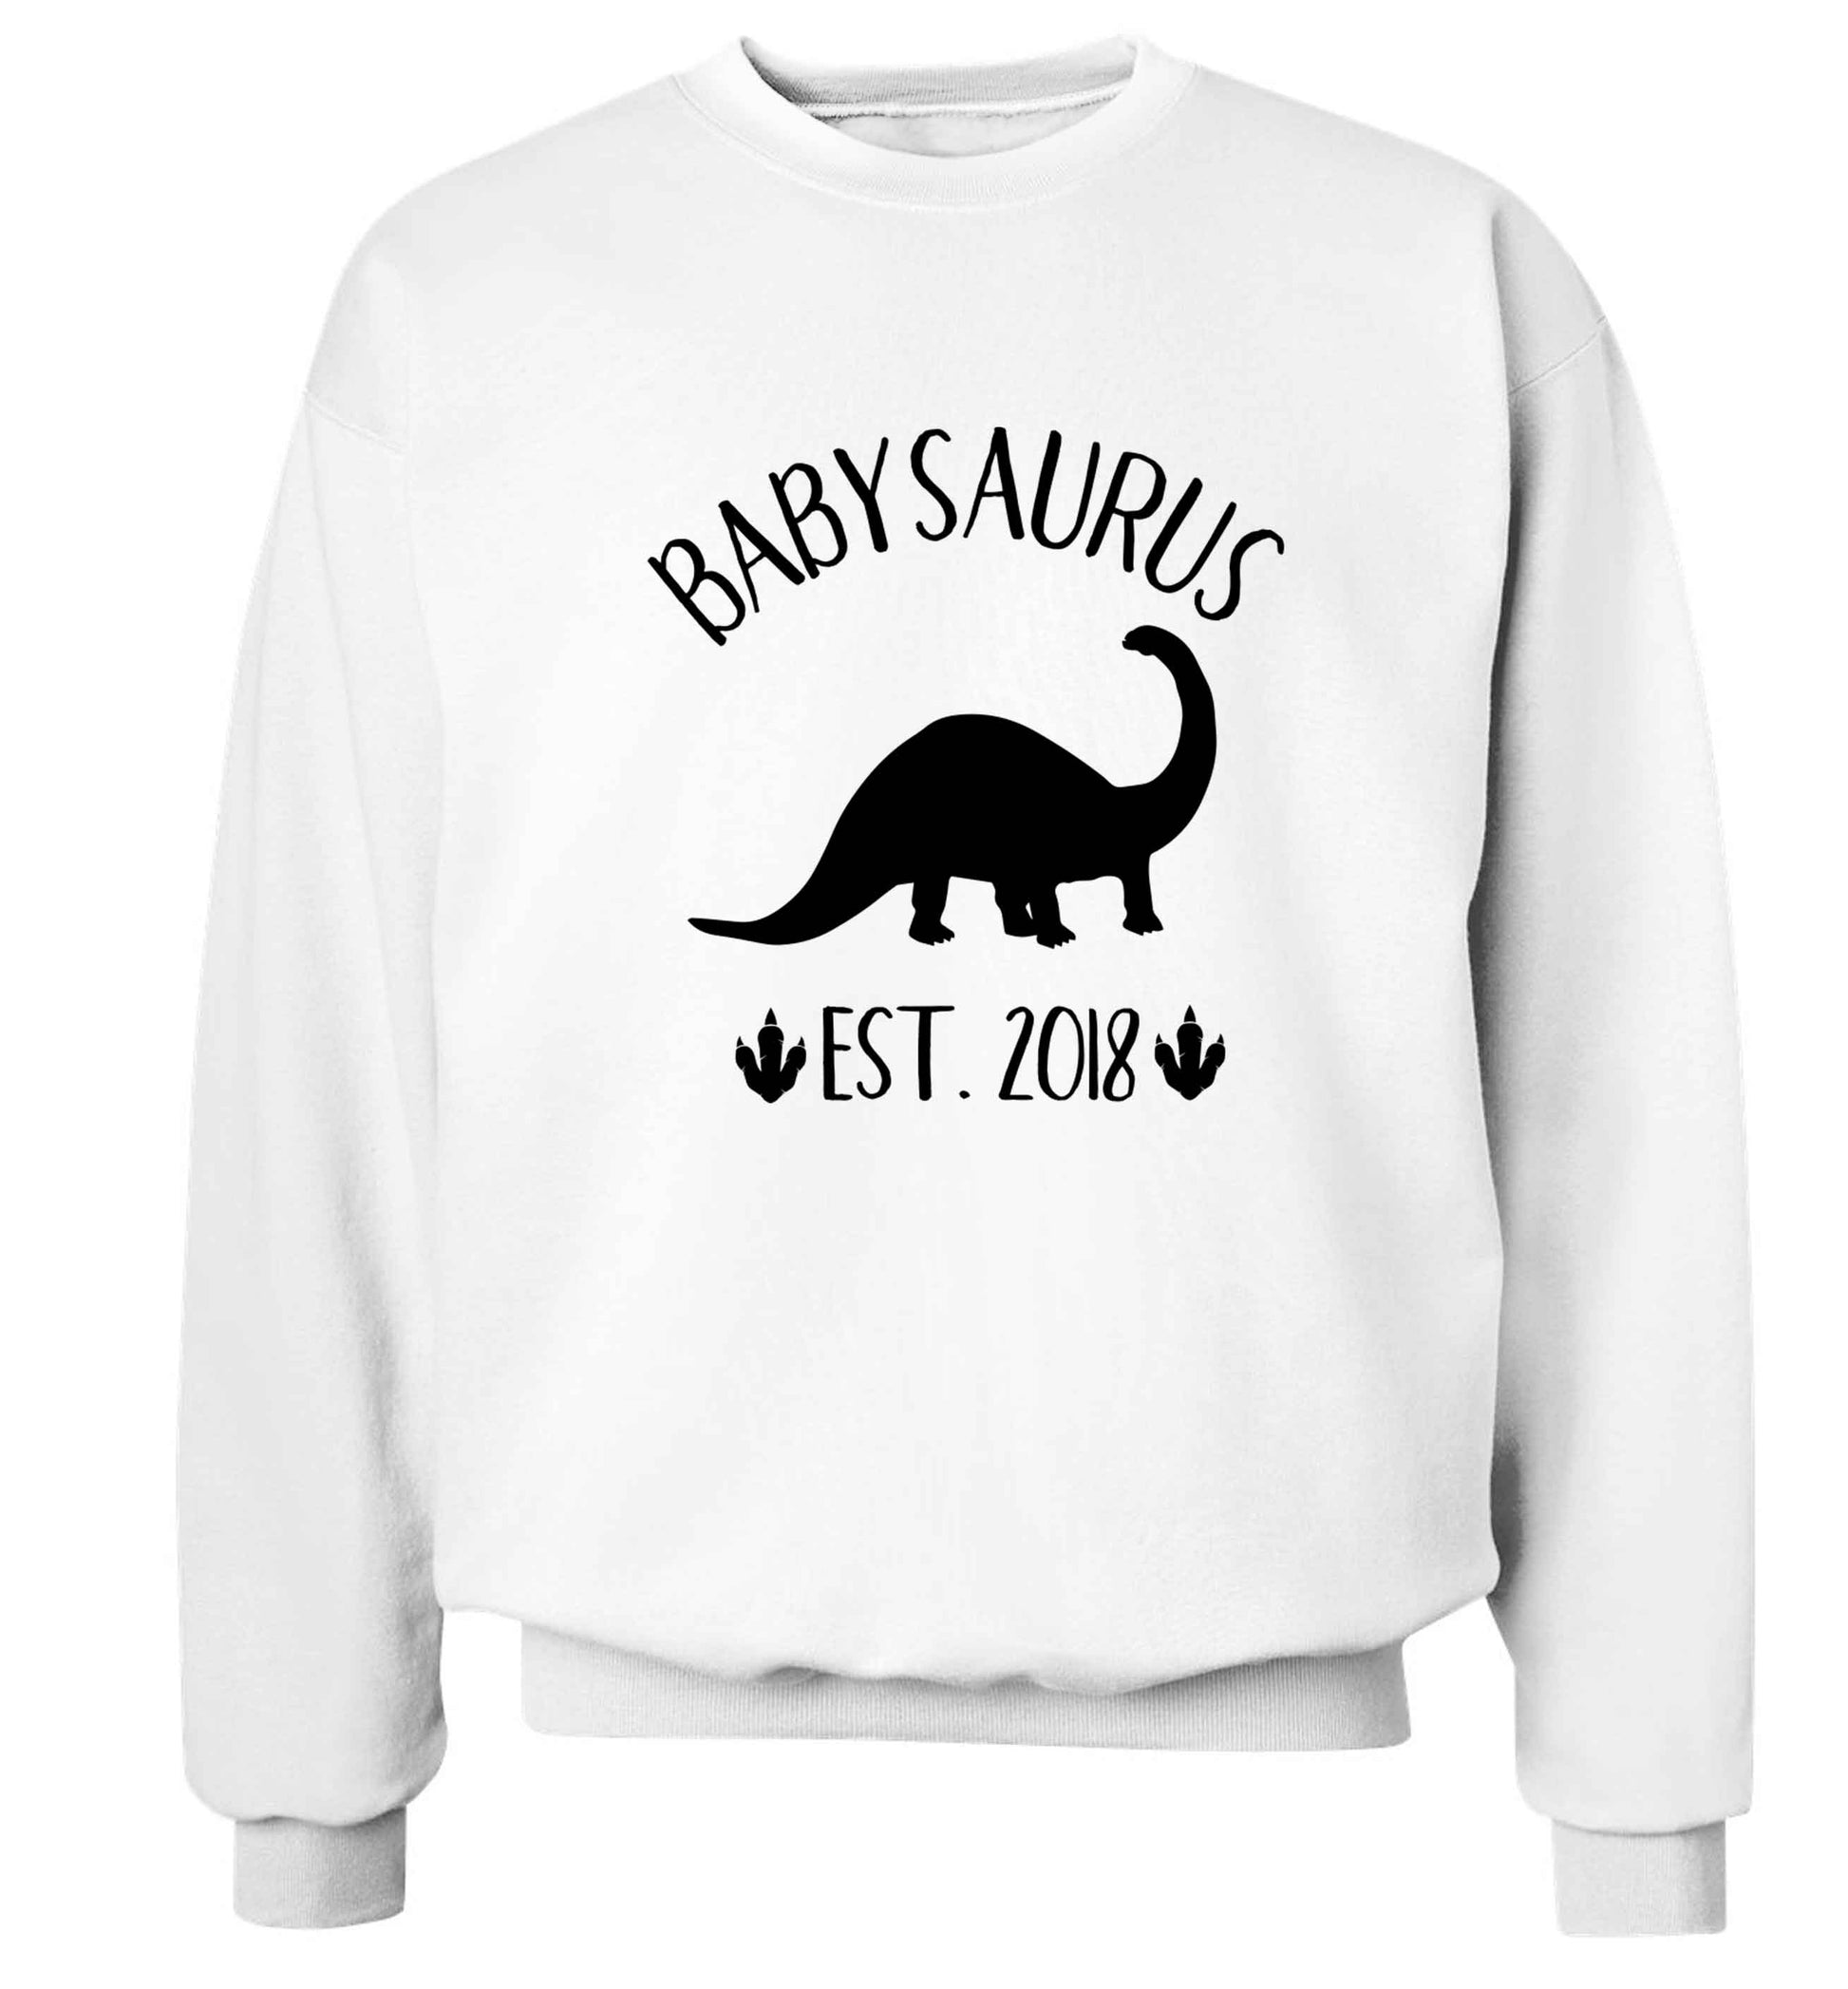 Personalised babysaurus since (custom date) Adult's unisex white Sweater 2XL